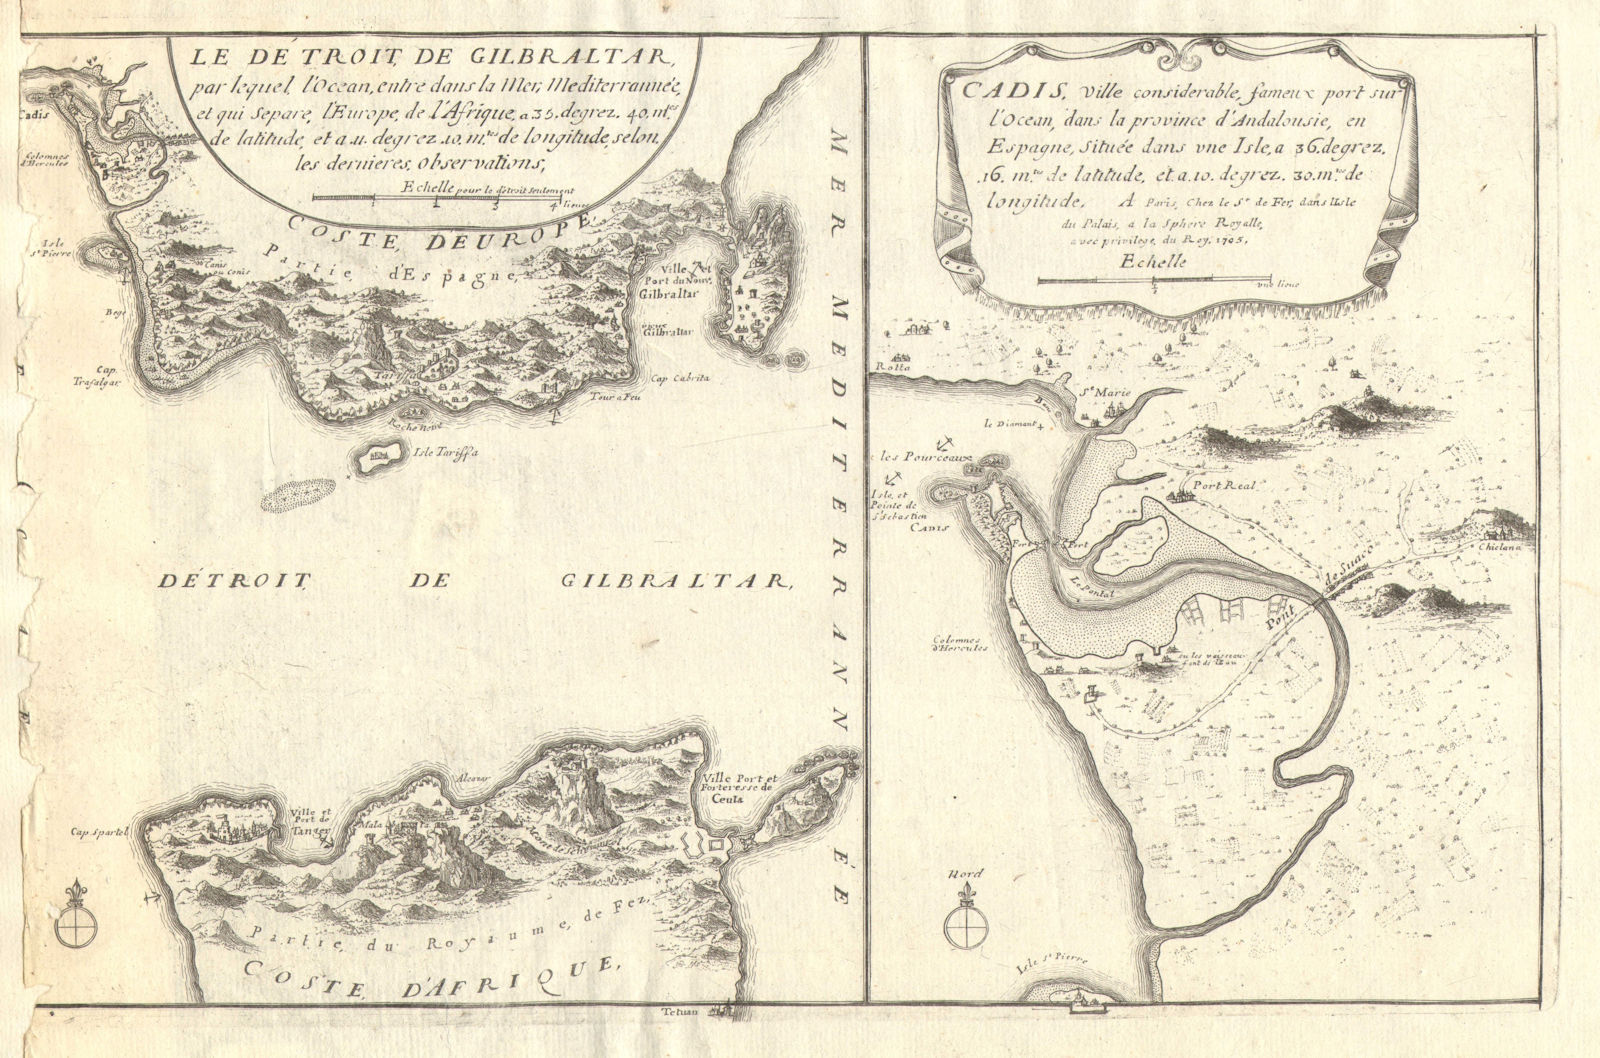 'Le detroit de Gilbraltar - Cadis'. Strait of Gibraltar & Cadiz. DE FER 1705 map